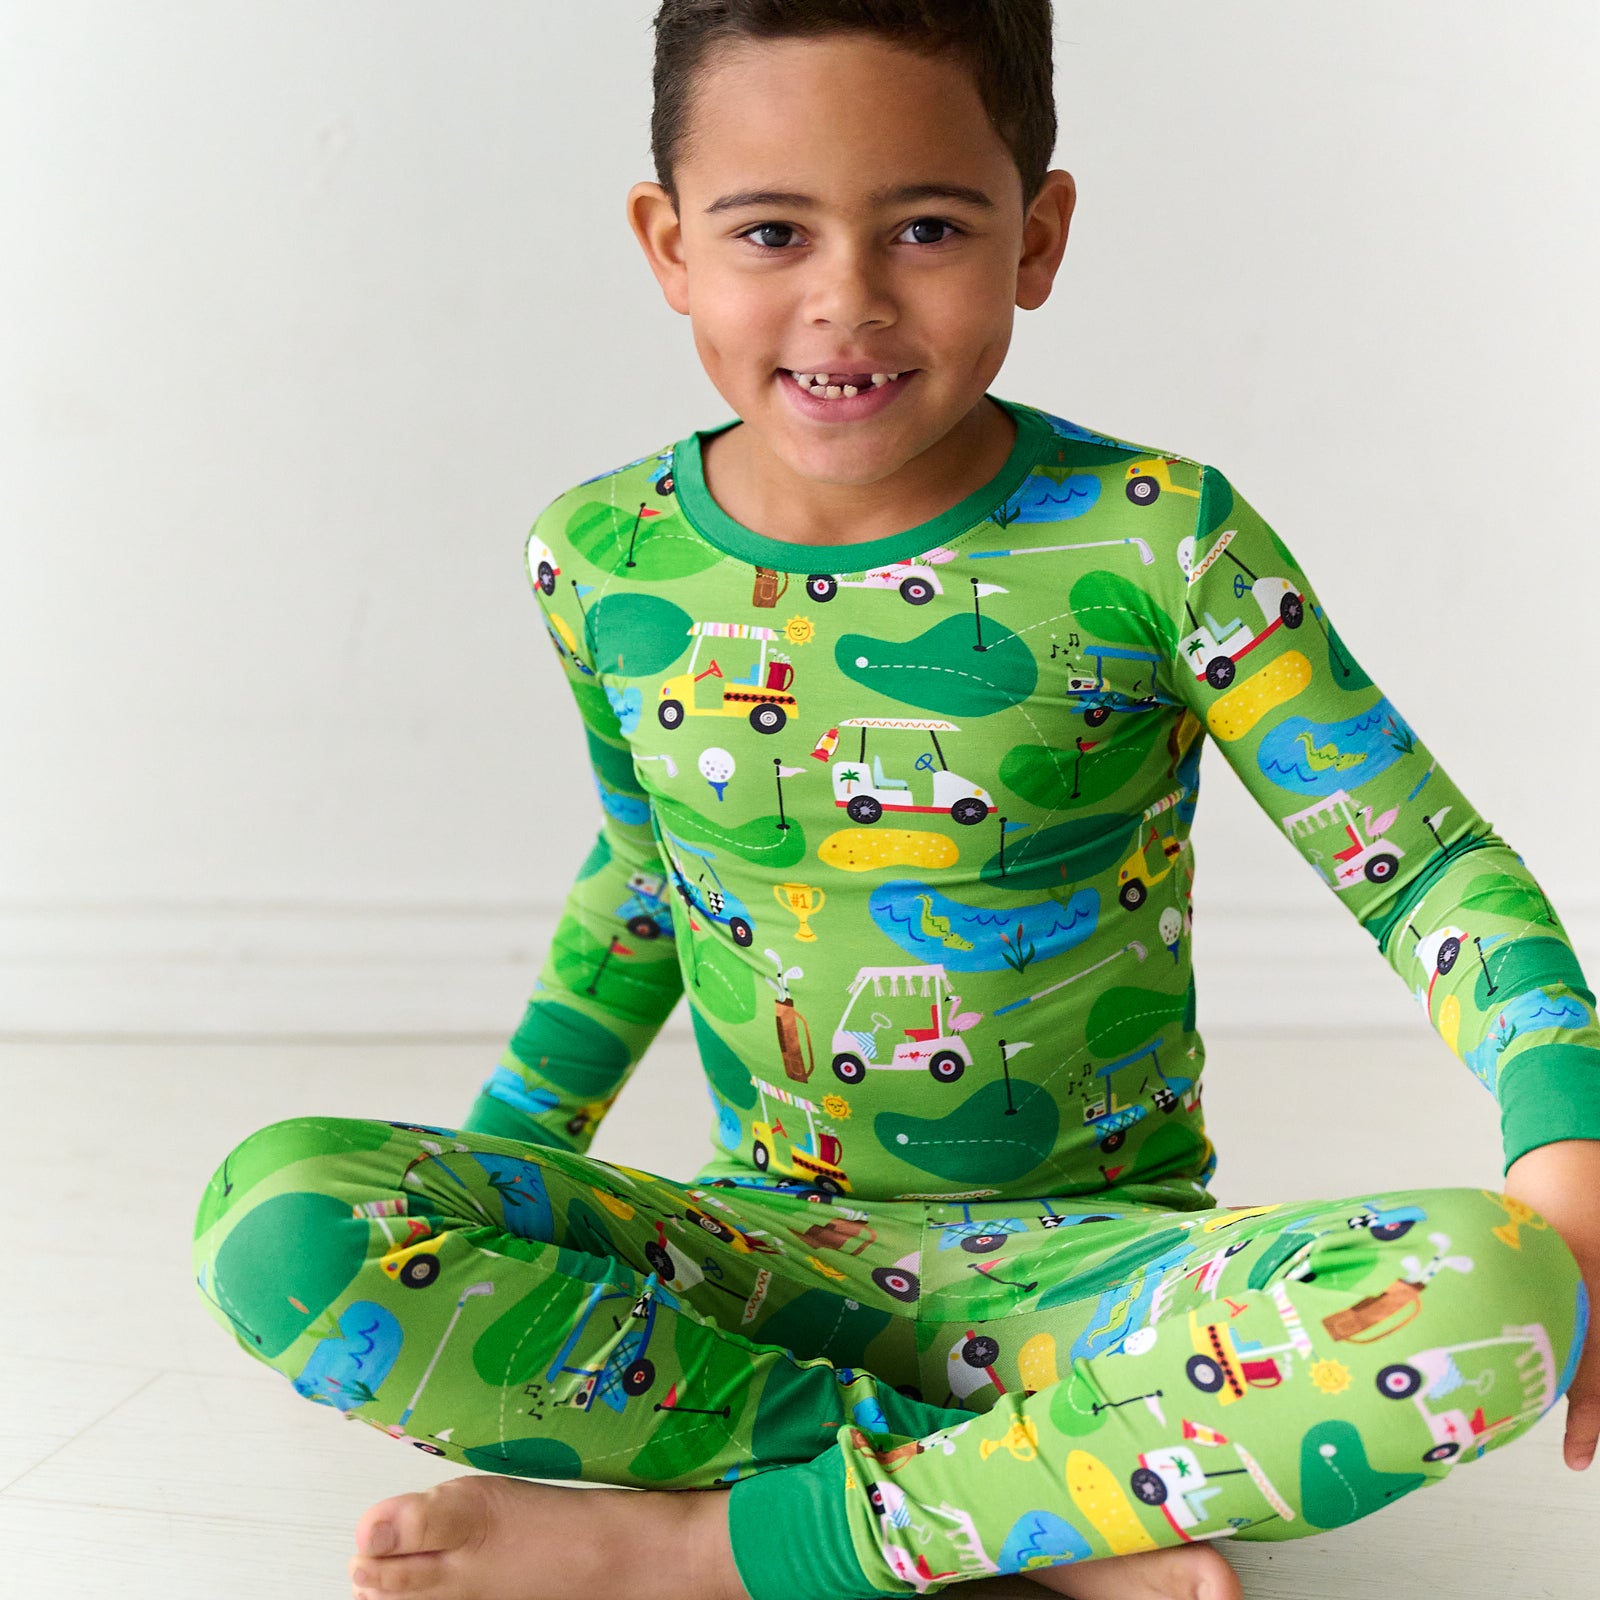 Child sitting on the ground wearing a Fairway Fun two-piece pajama set